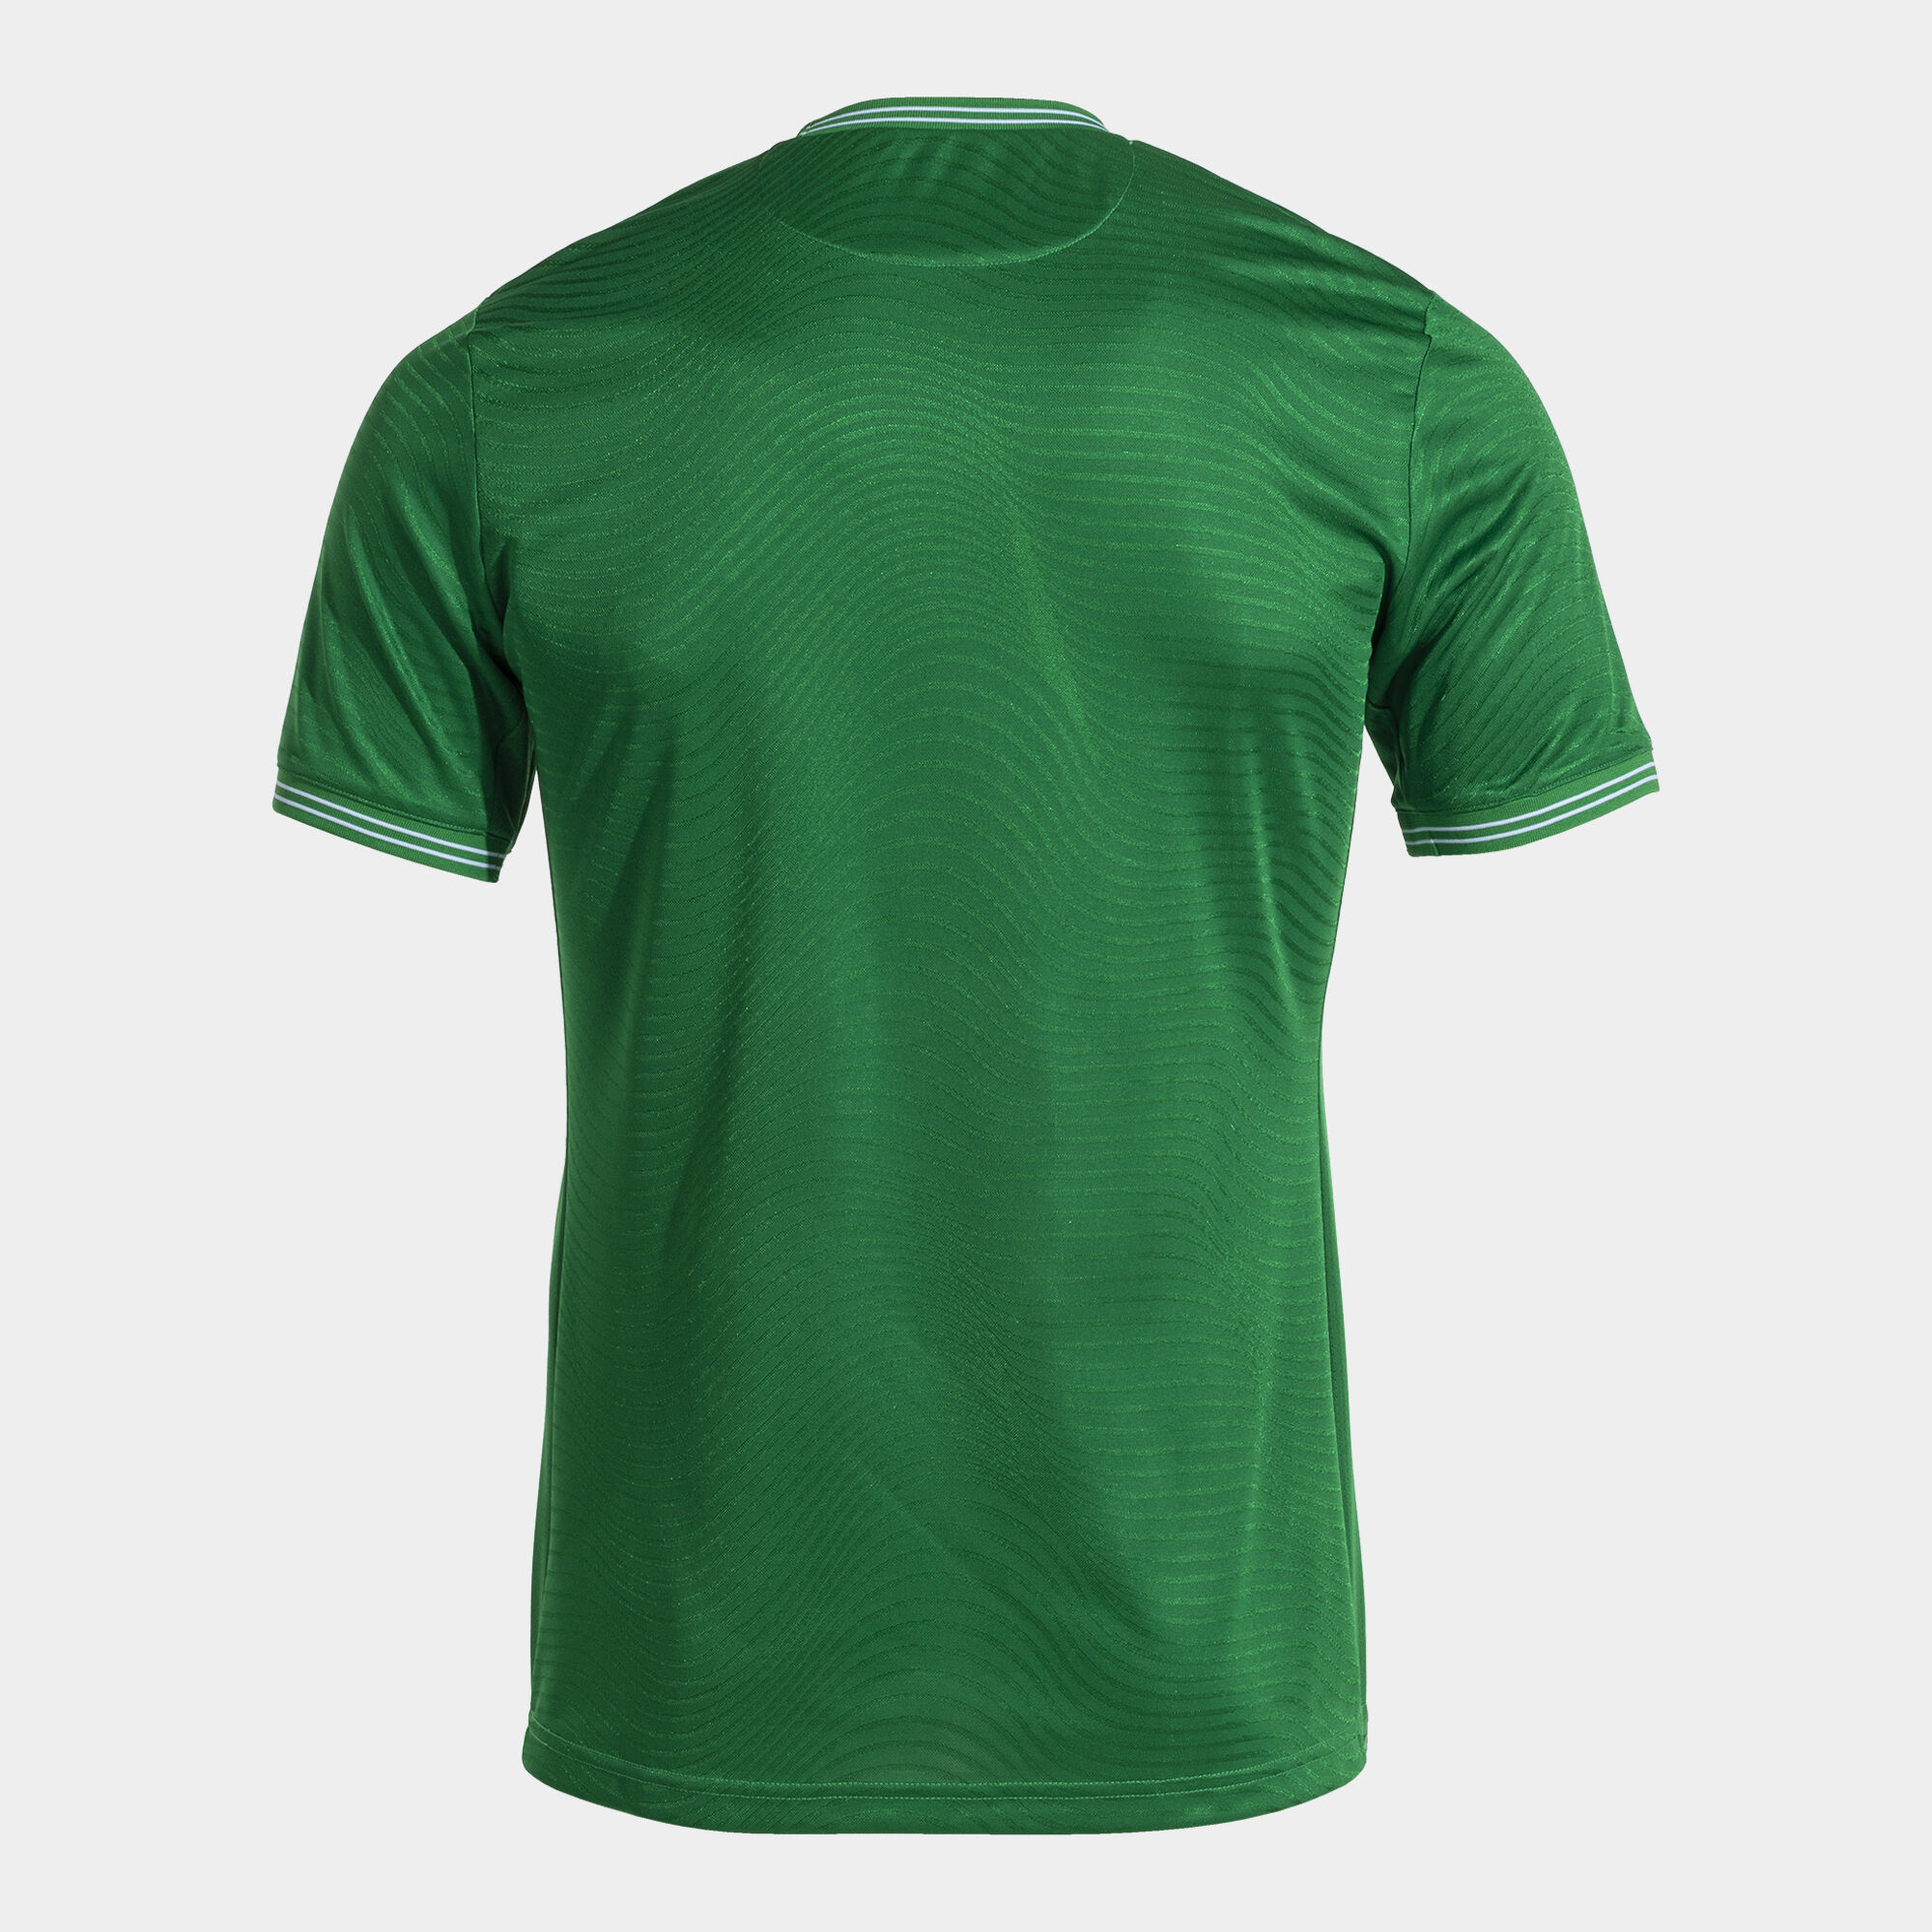 Shirt short sleeve man Toletum V green